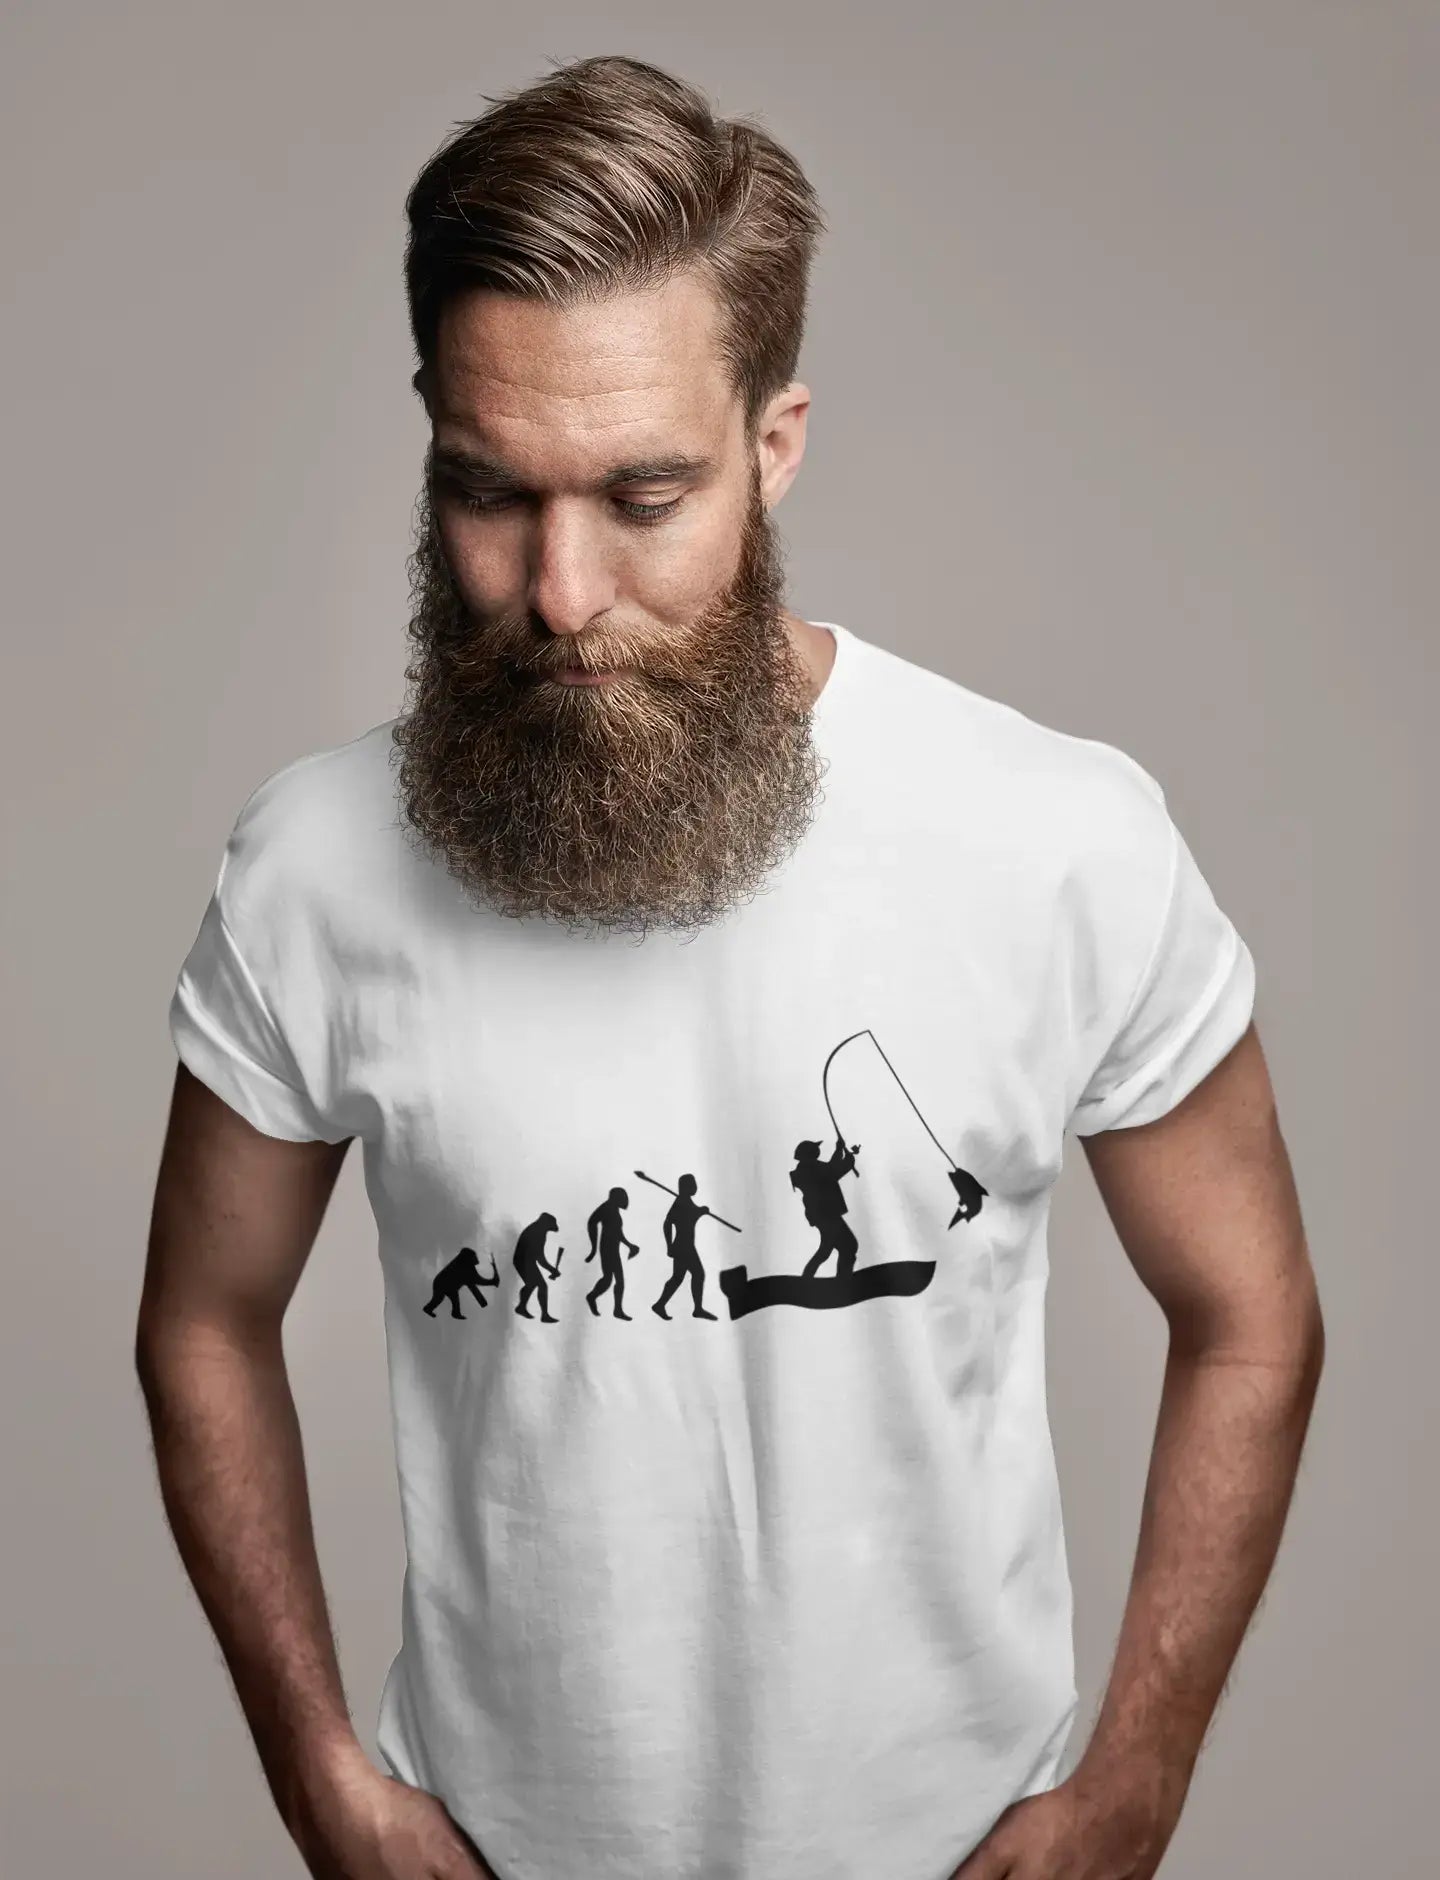 ULTRABASIC - Graphic Printed Men's Evolution of the Fishing Boat T-Shirt Vintage White